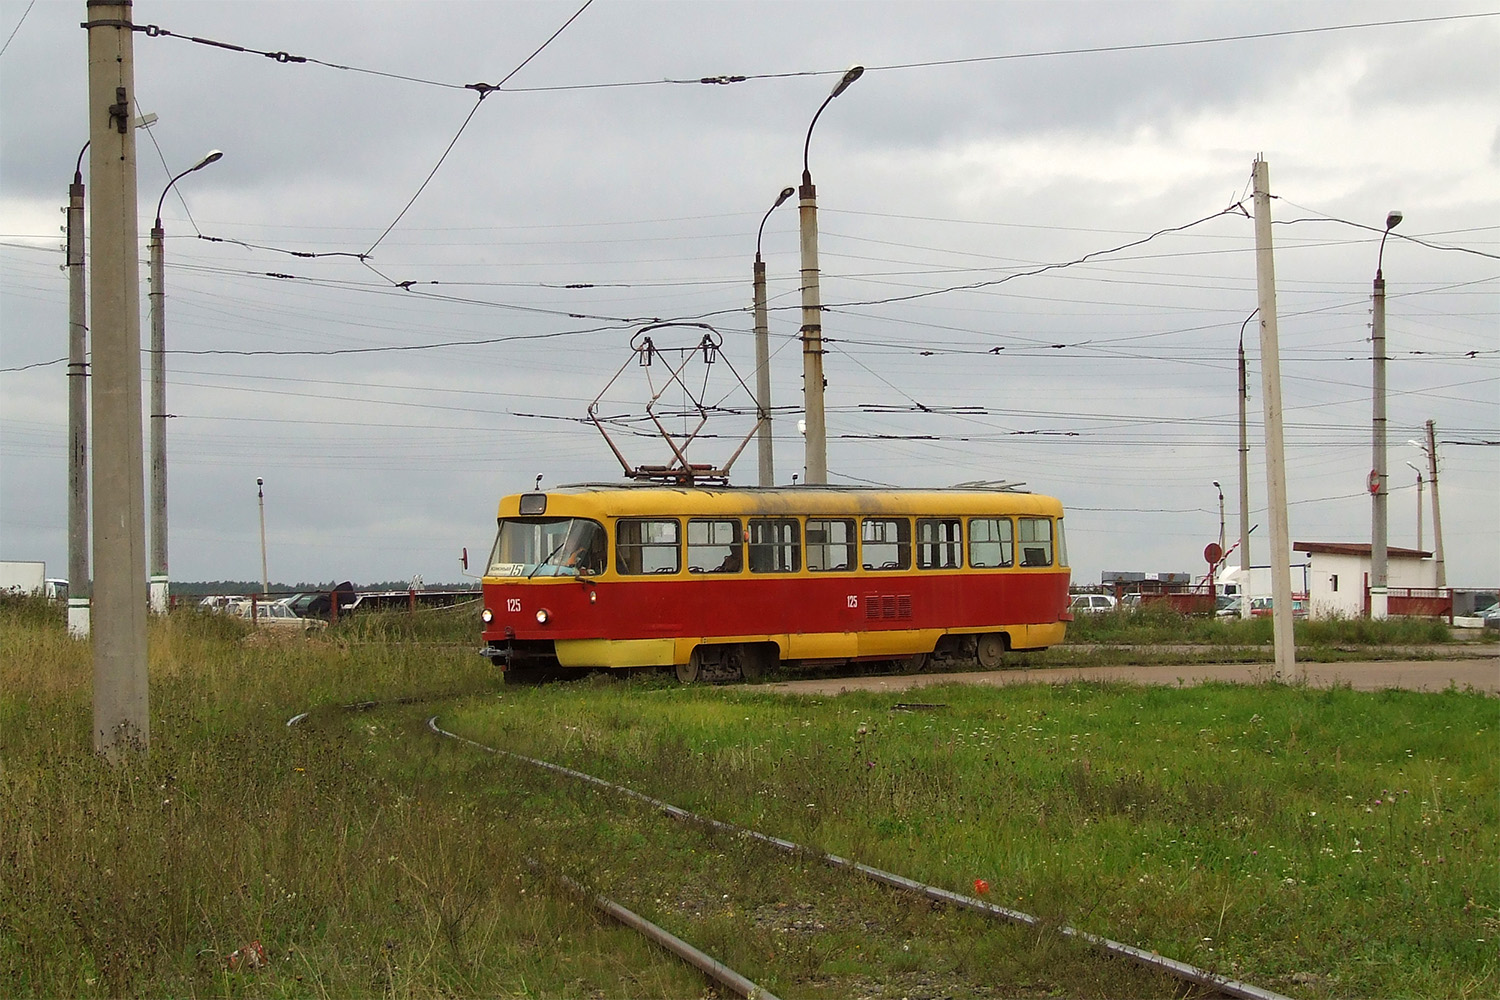 Tver, Tatra T3SU č. 125; Tver — Tver tramway in the early 2000s (2002 — 2006)